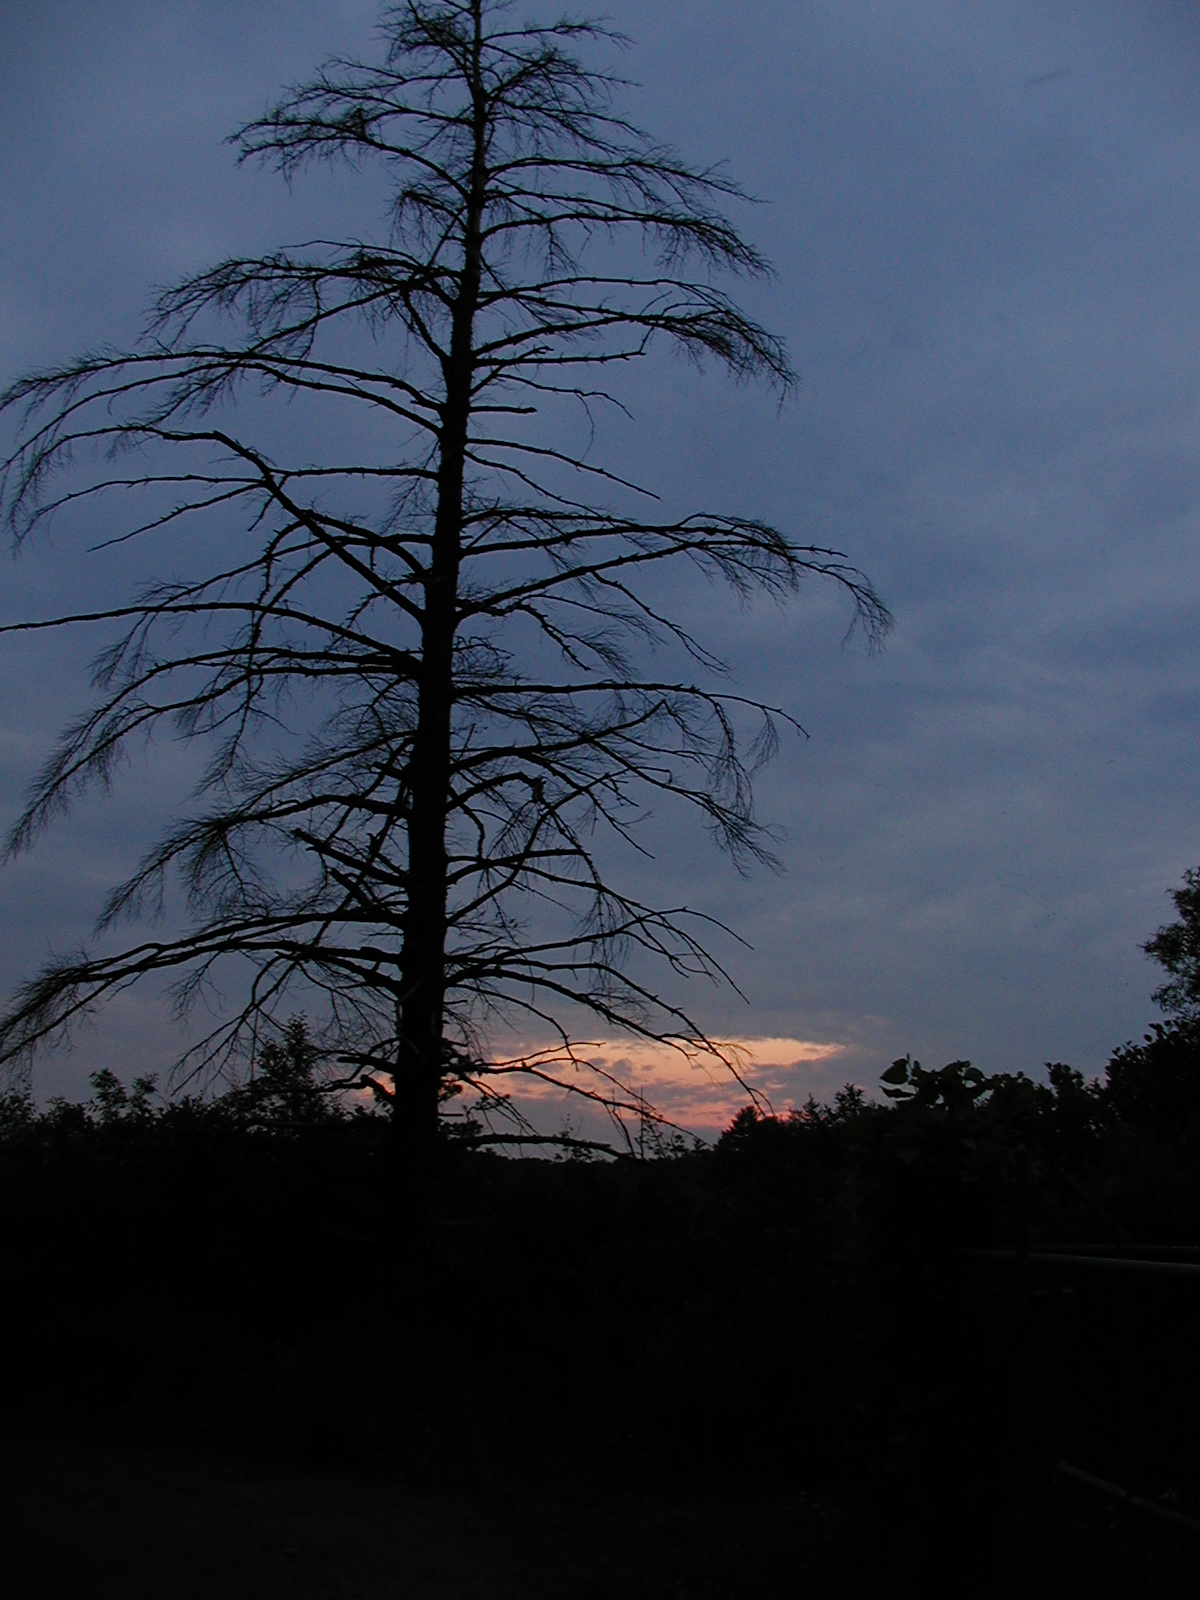 Tree at sunset